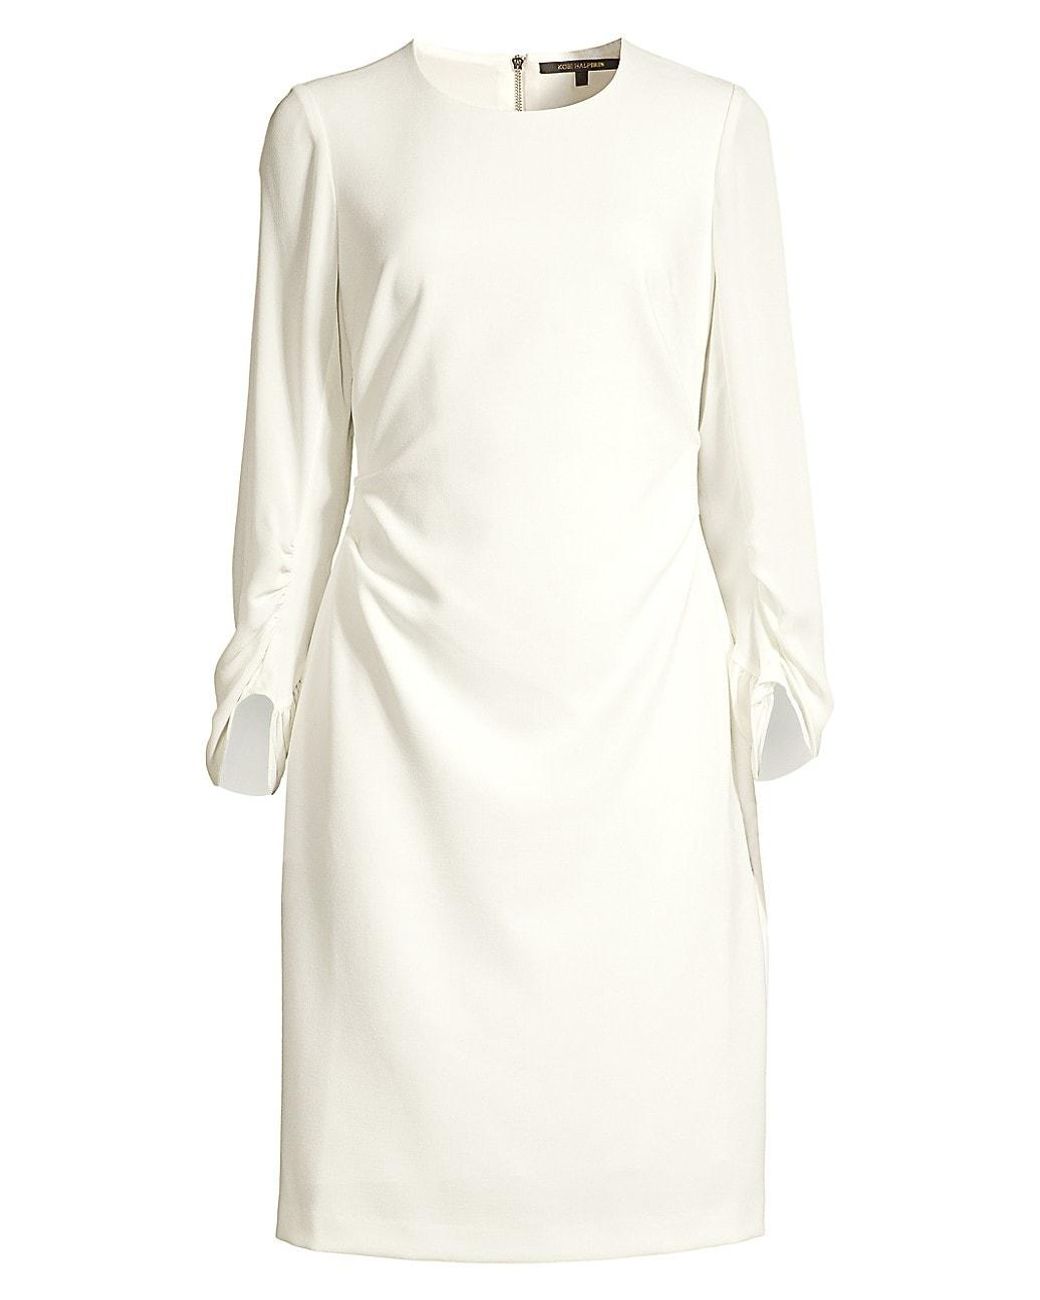 Kobi Halperin Synthetic Drew Sheath Dress in Ivory (White) | Lyst